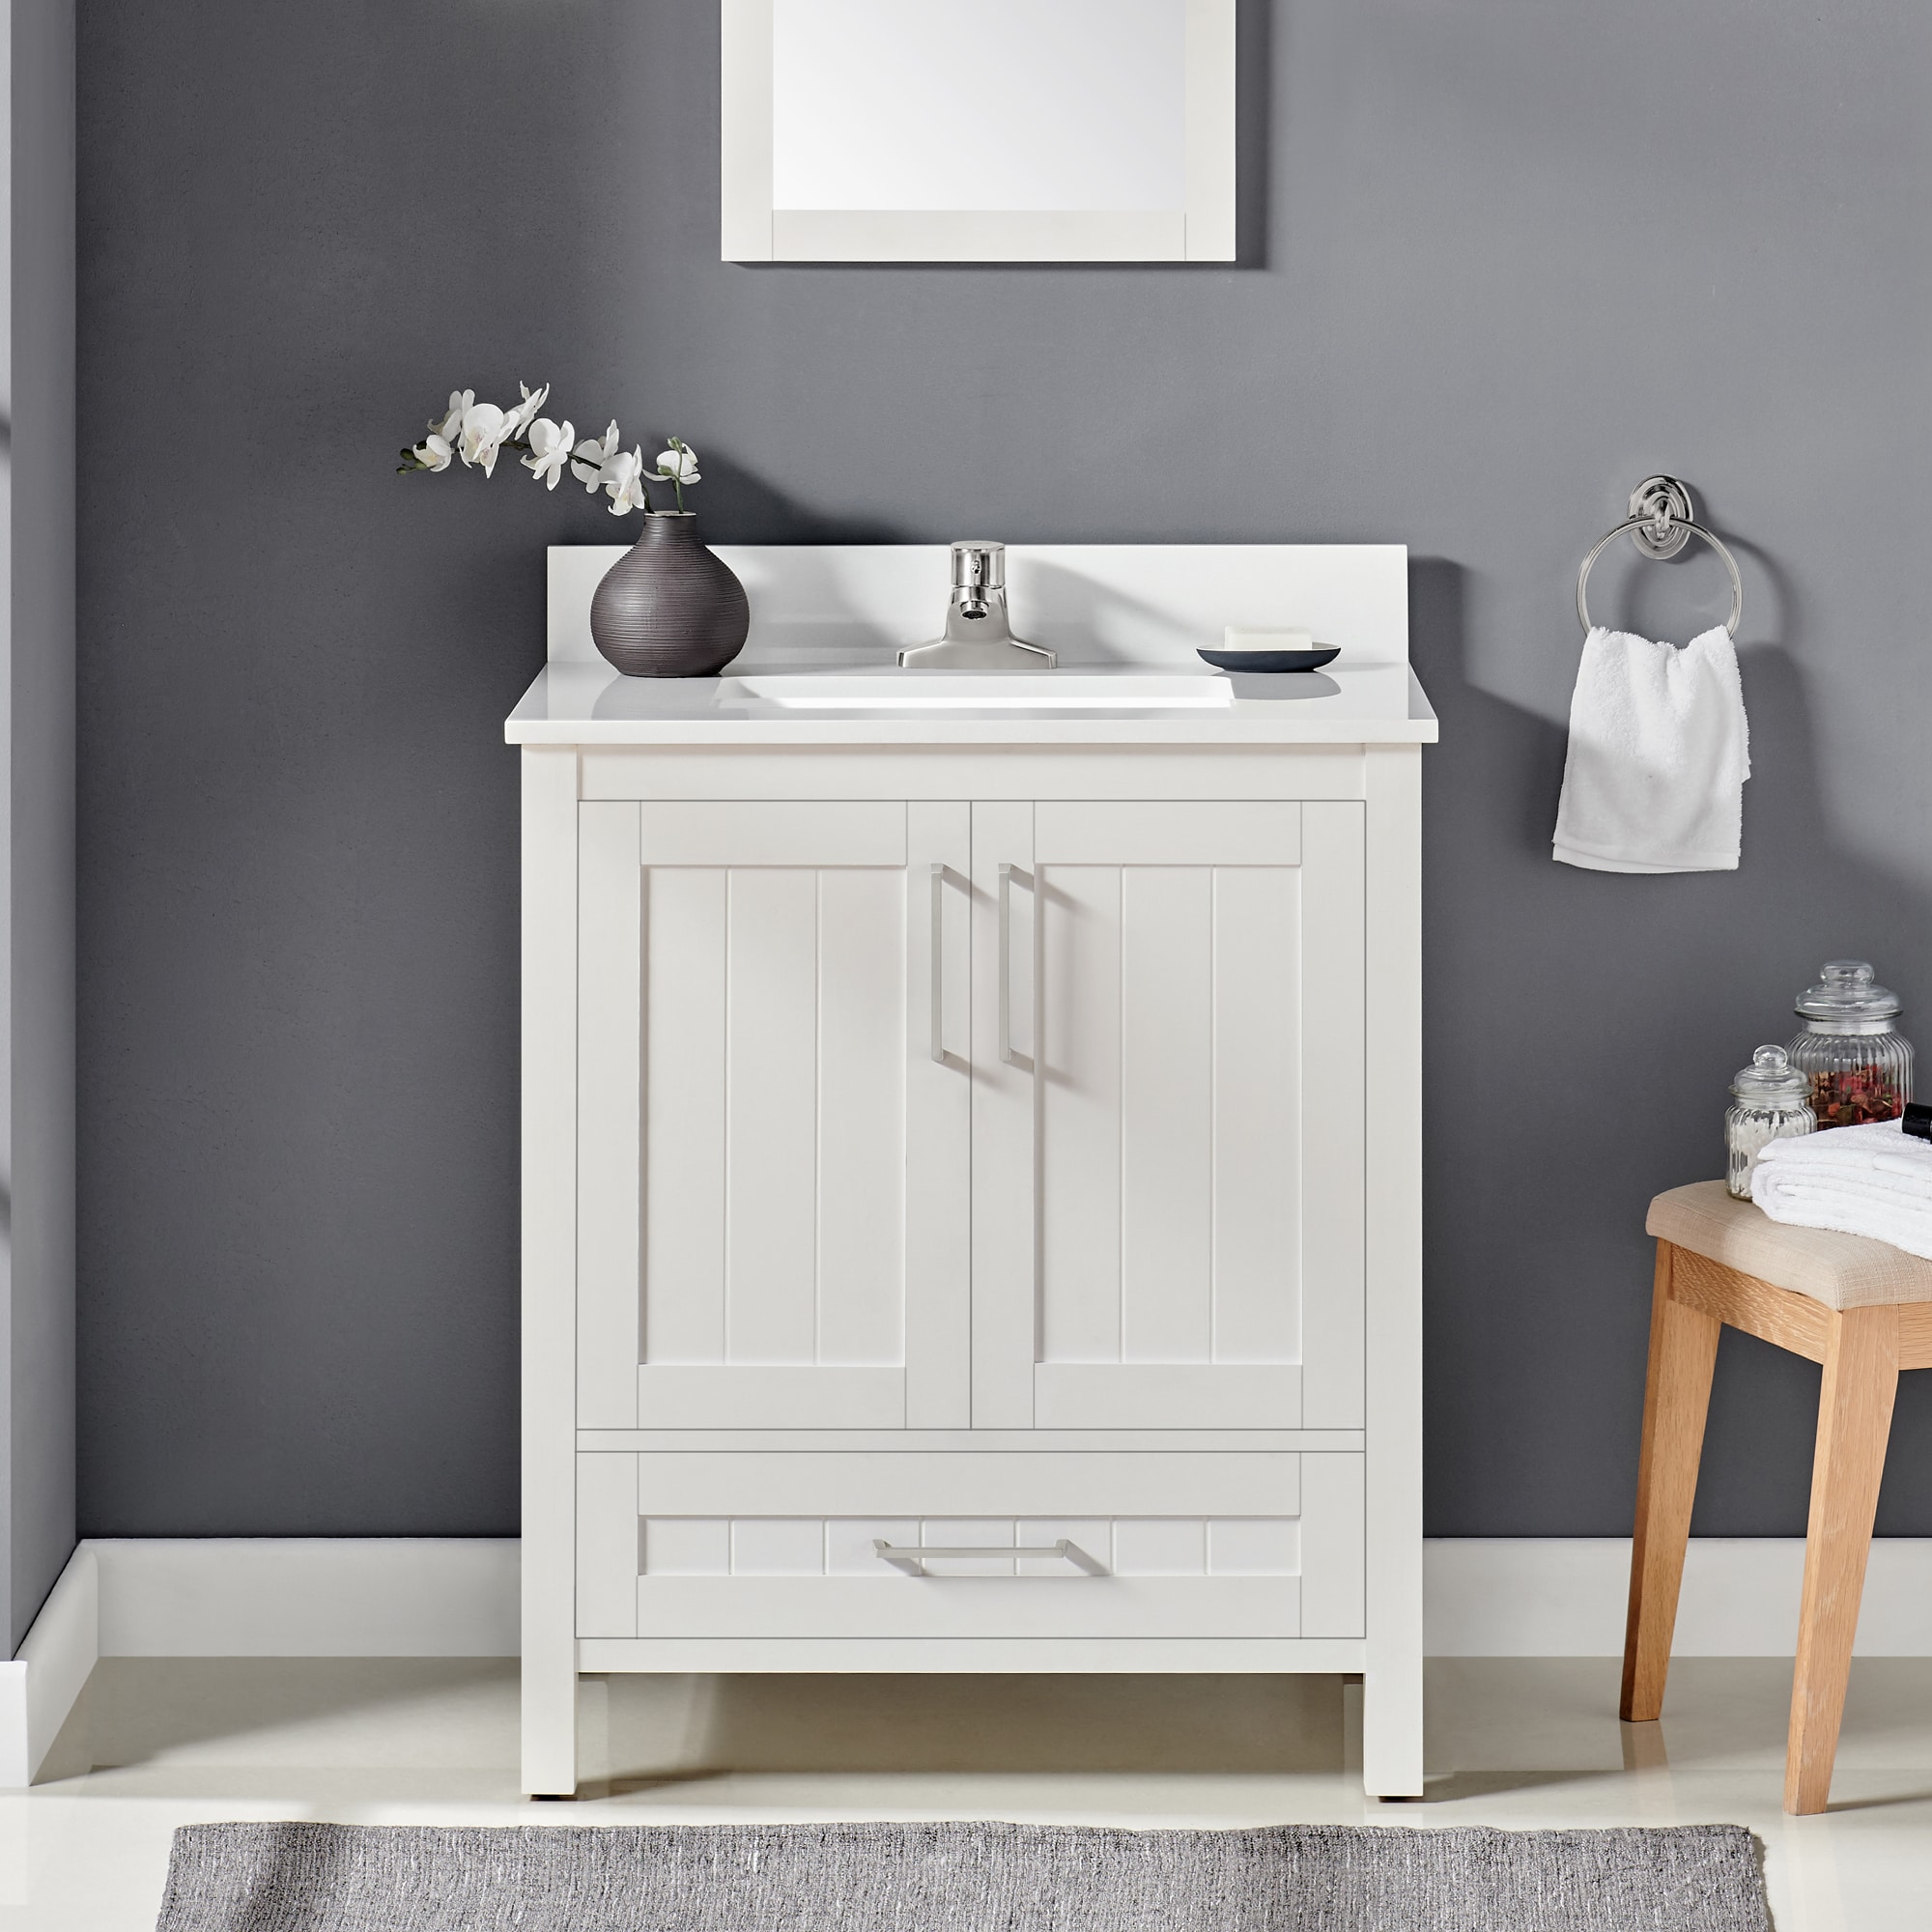 Darwin 30-in White Undermount Single Sink Bathroom Vanity with White Engineered Stone Top Marble | - OVE Decors 15VVAR-DARW30-007